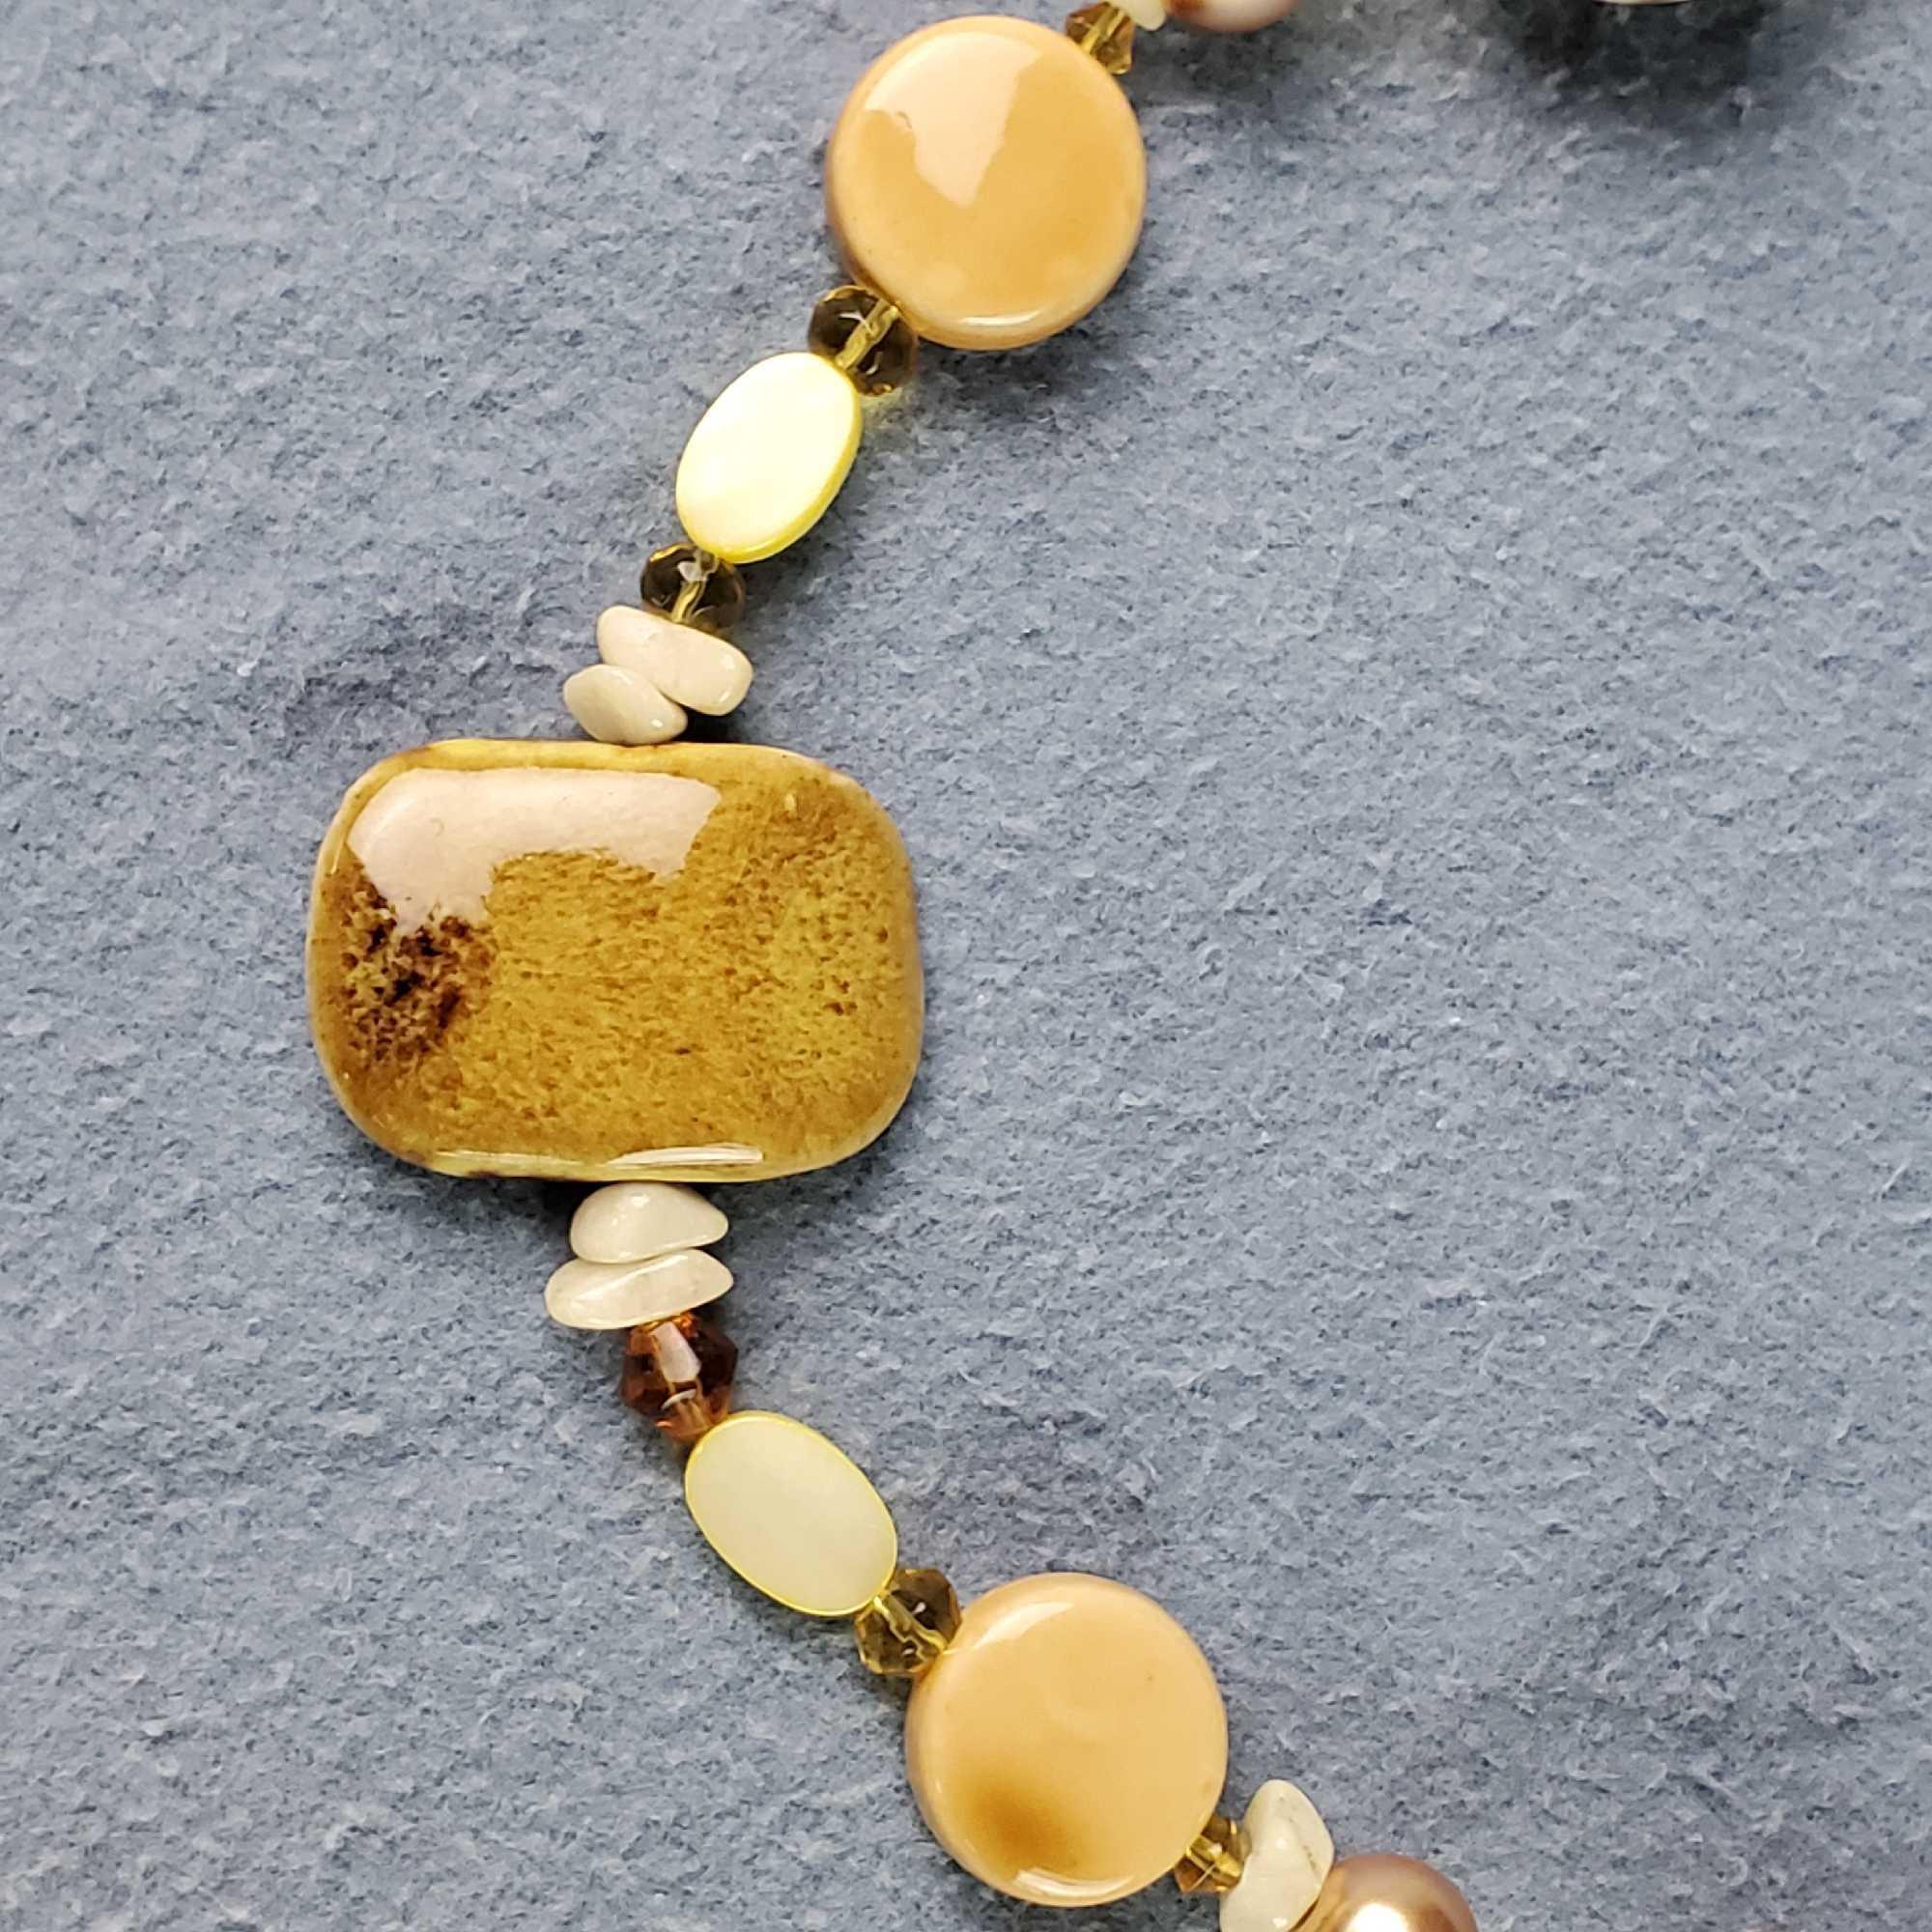 2 unique matching bead/stone necklaces